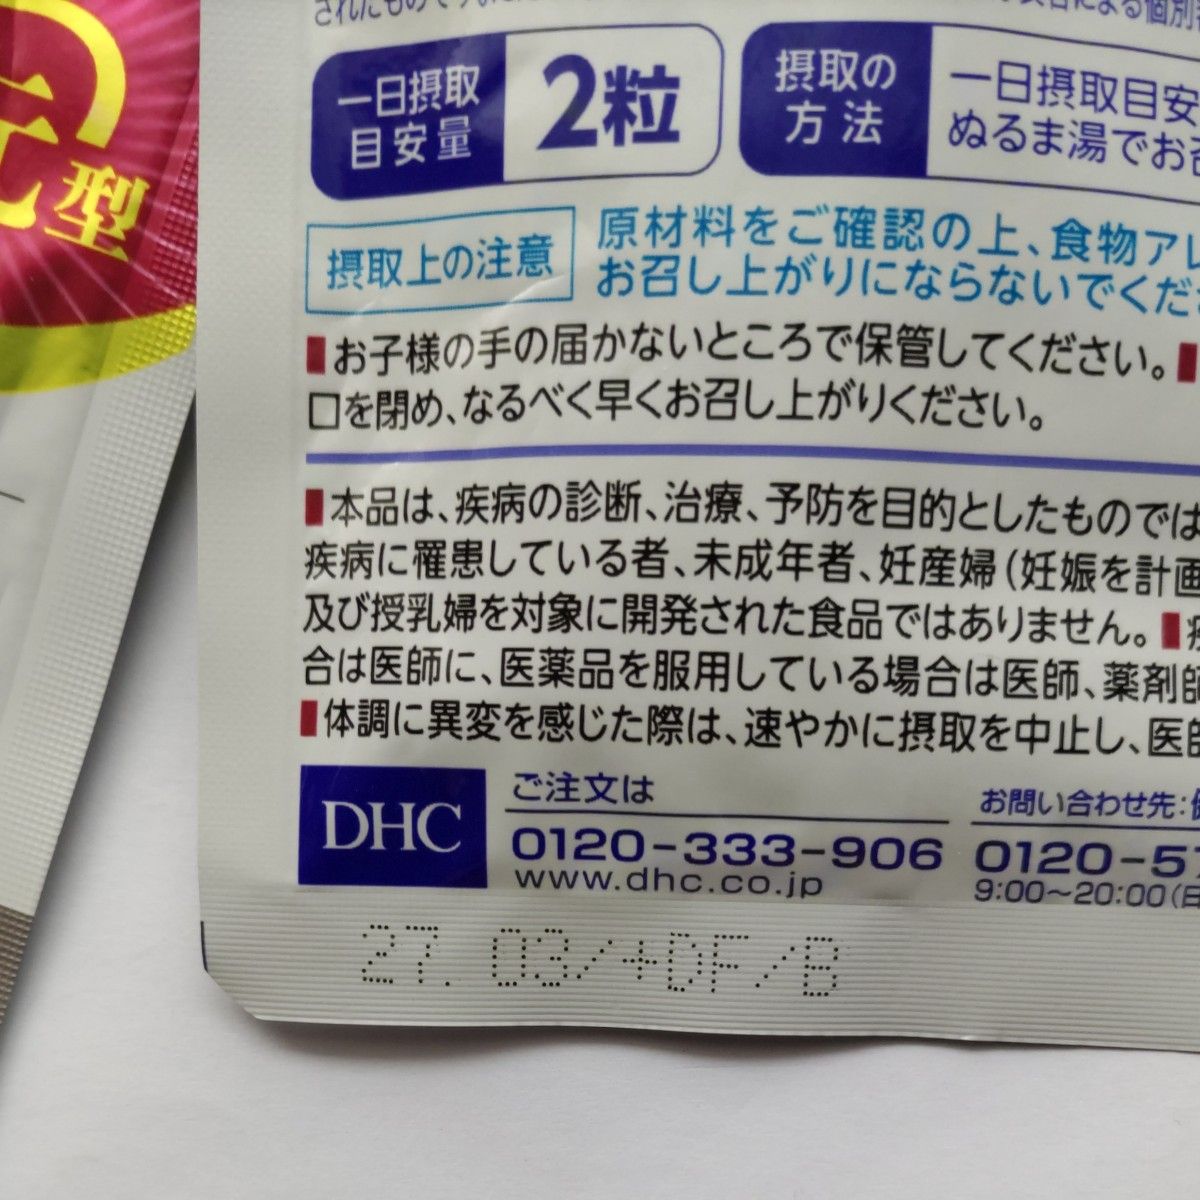 DHC コエンザイムQ10 還元型 30日分 【機能性表示食品】  3袋